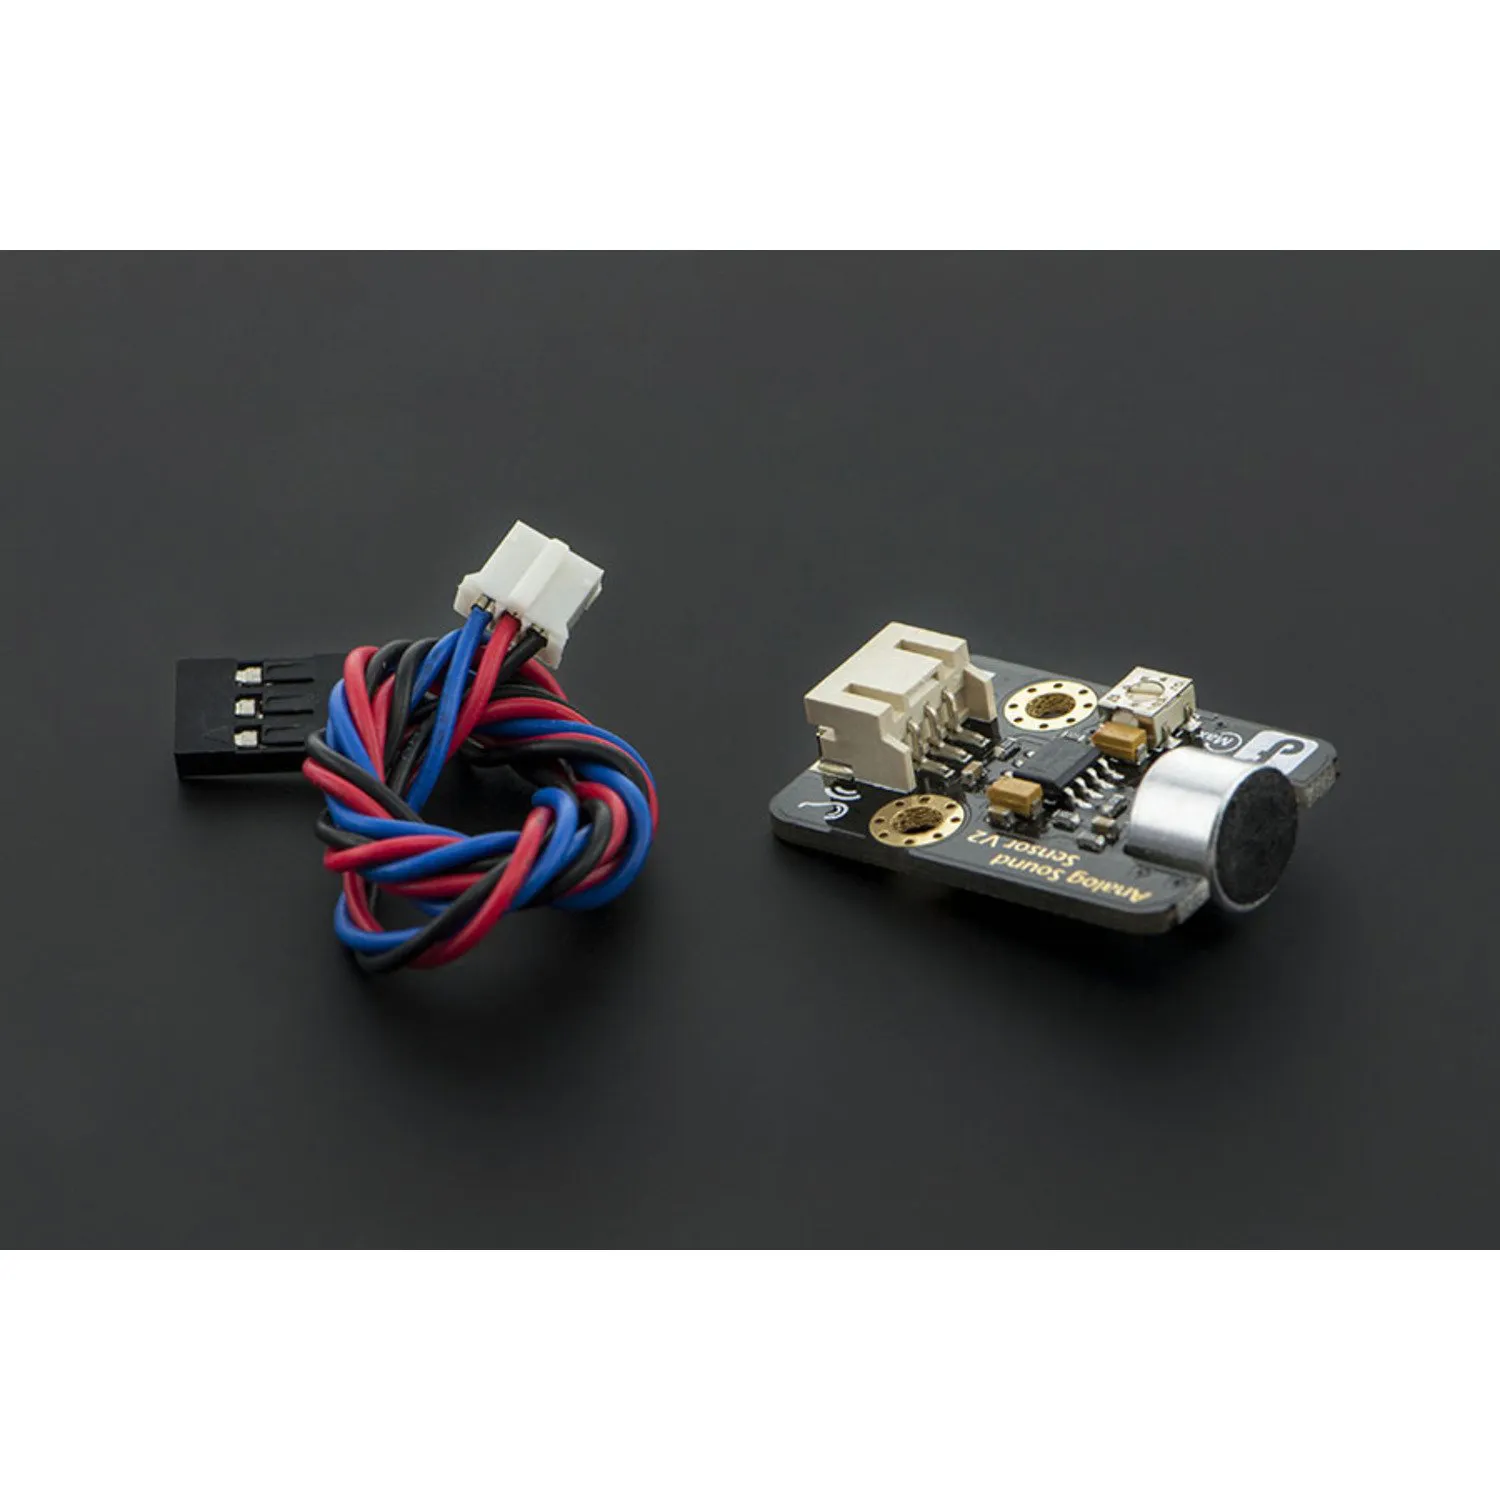 Photo of Gravity: Analog Sound Sensor For Arduino